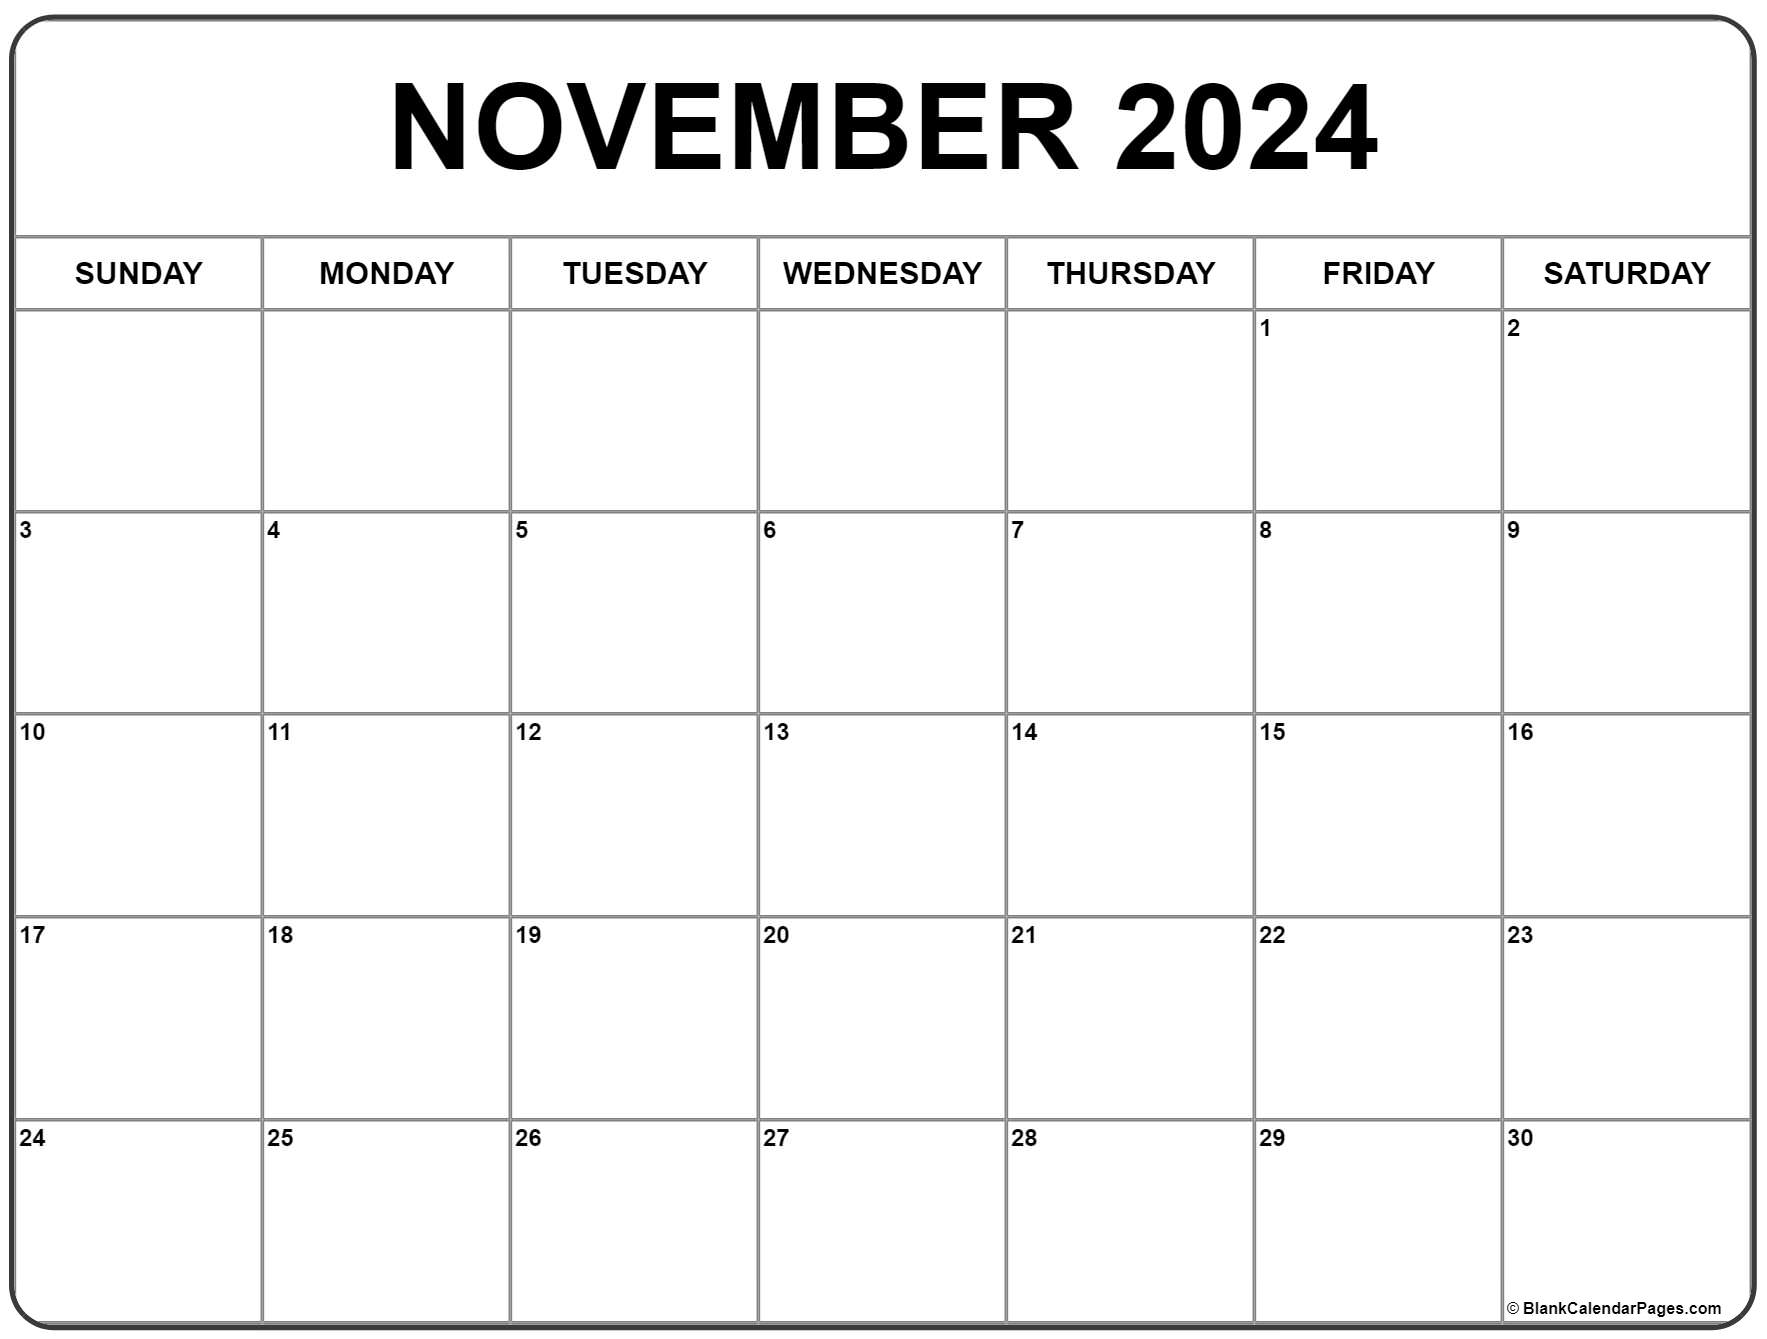 Nov 2022 Printable Calendar November 2022 Calendar | Free Printable Calendar Templates